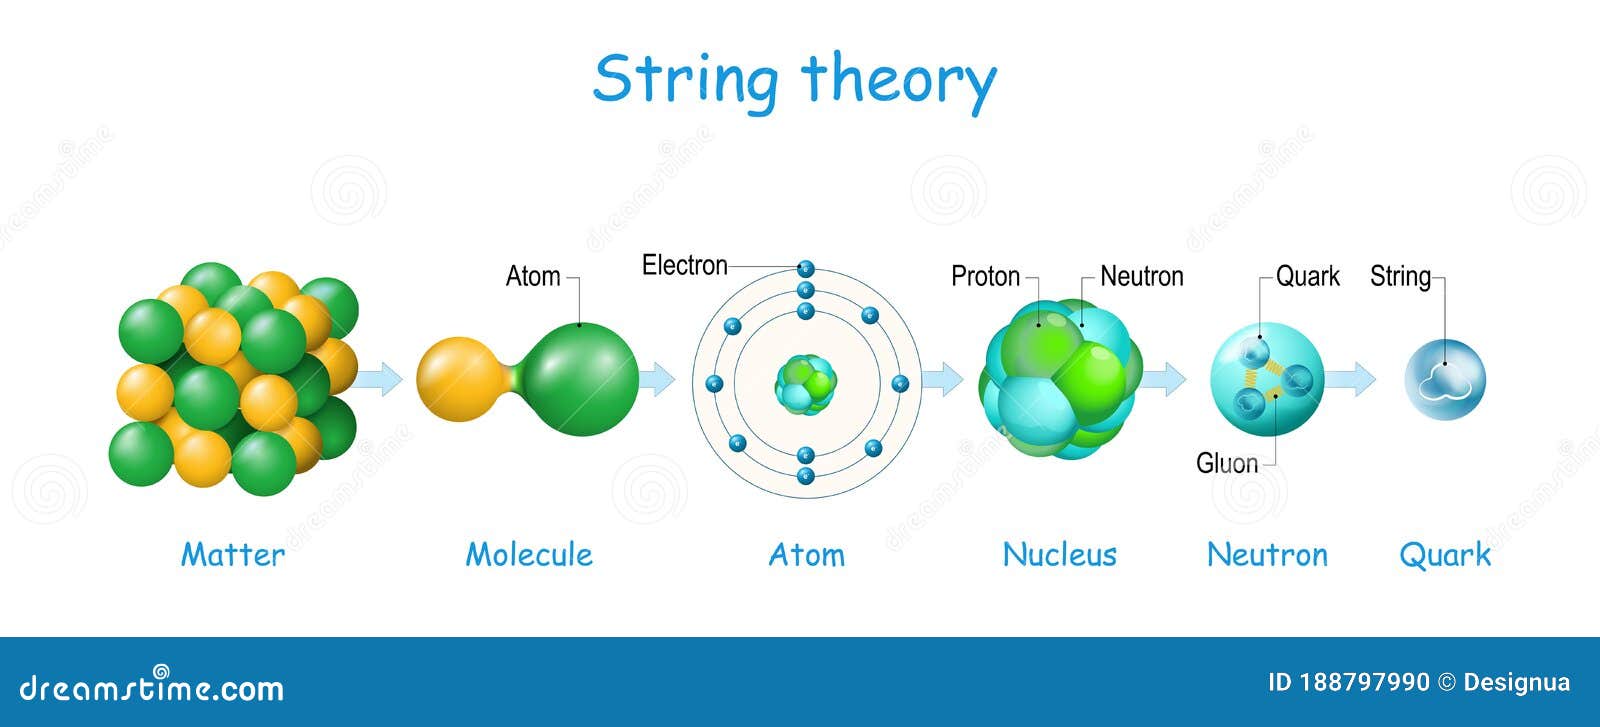 string theory. quantum physics